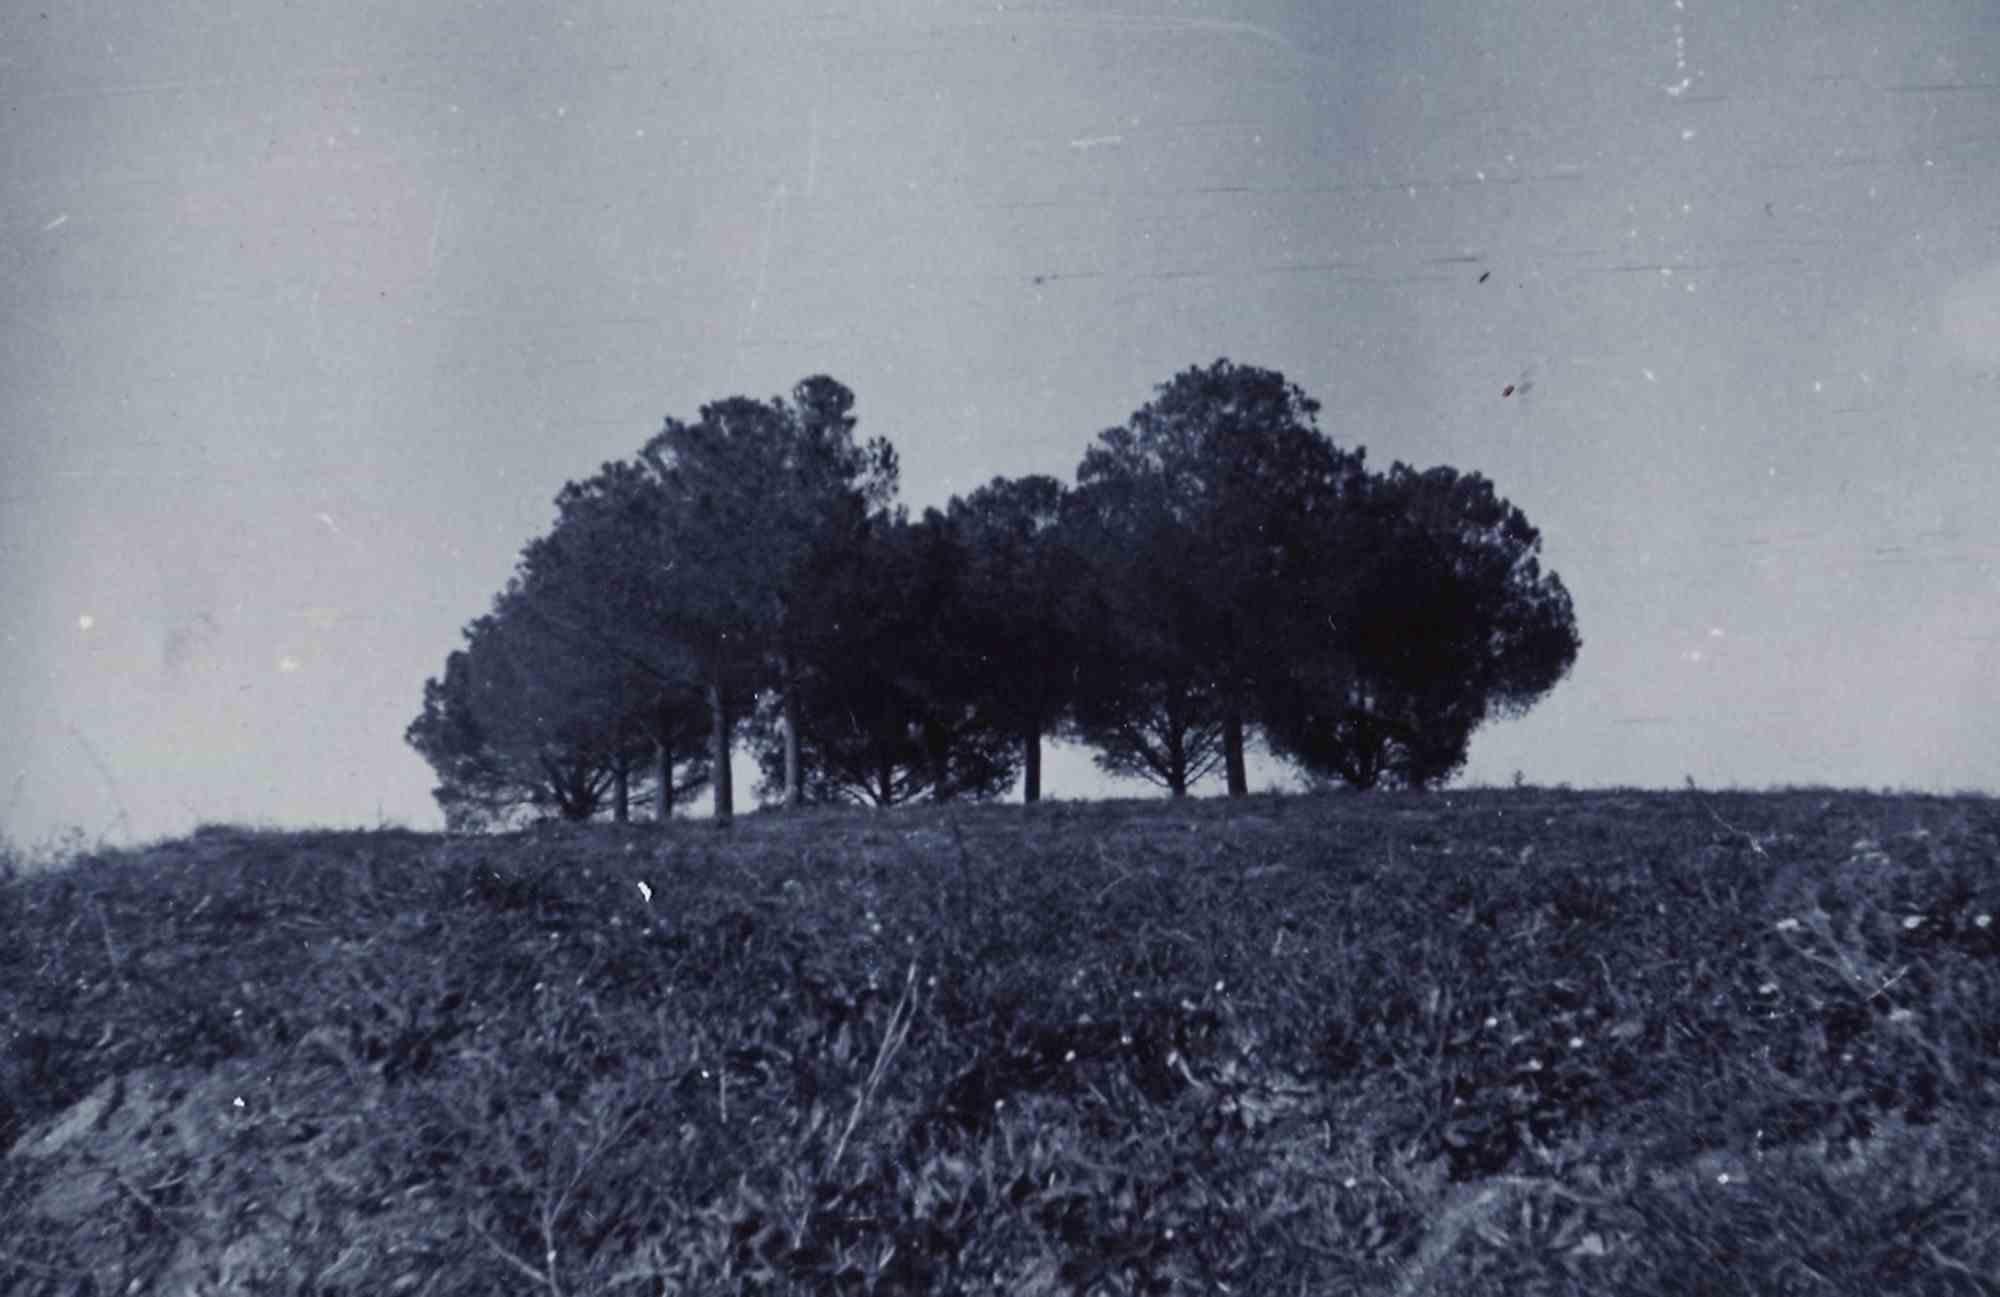 Unknown Figurative Photograph – Old days Foto – Bäume-Szenery – Vintage-Foto – Mitte des 20. Jahrhunderts